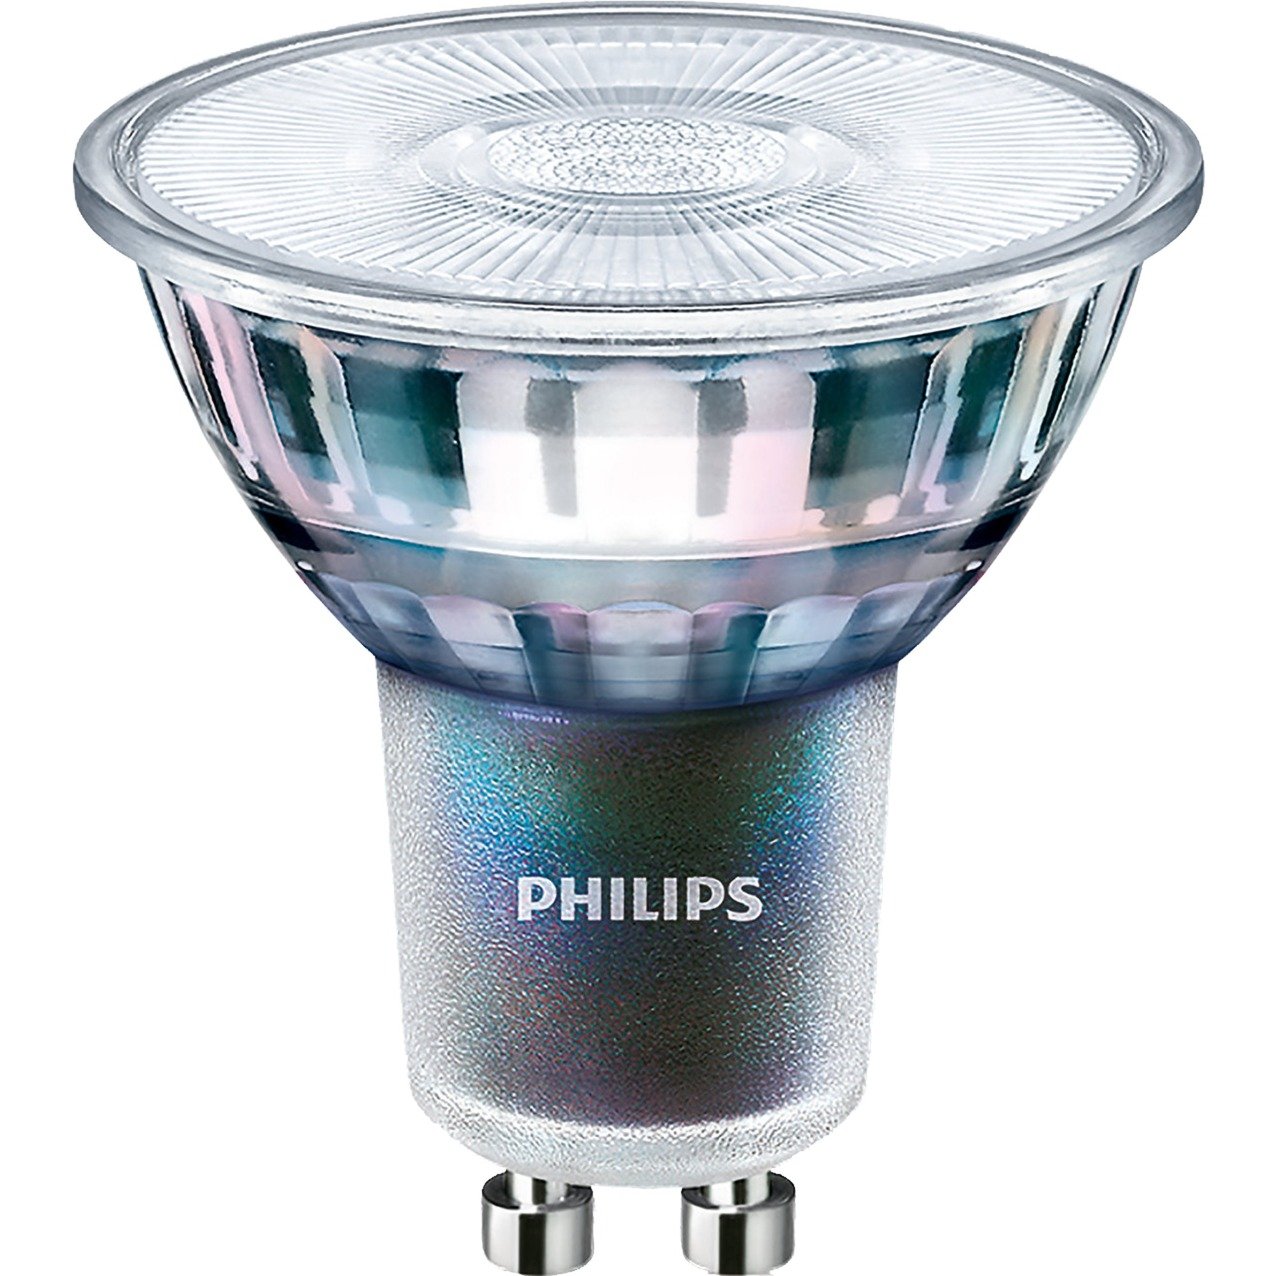 MASTER LEDspot ExpertColor 5.5-50W GU10 927 25D, LED-Lampe von Philips